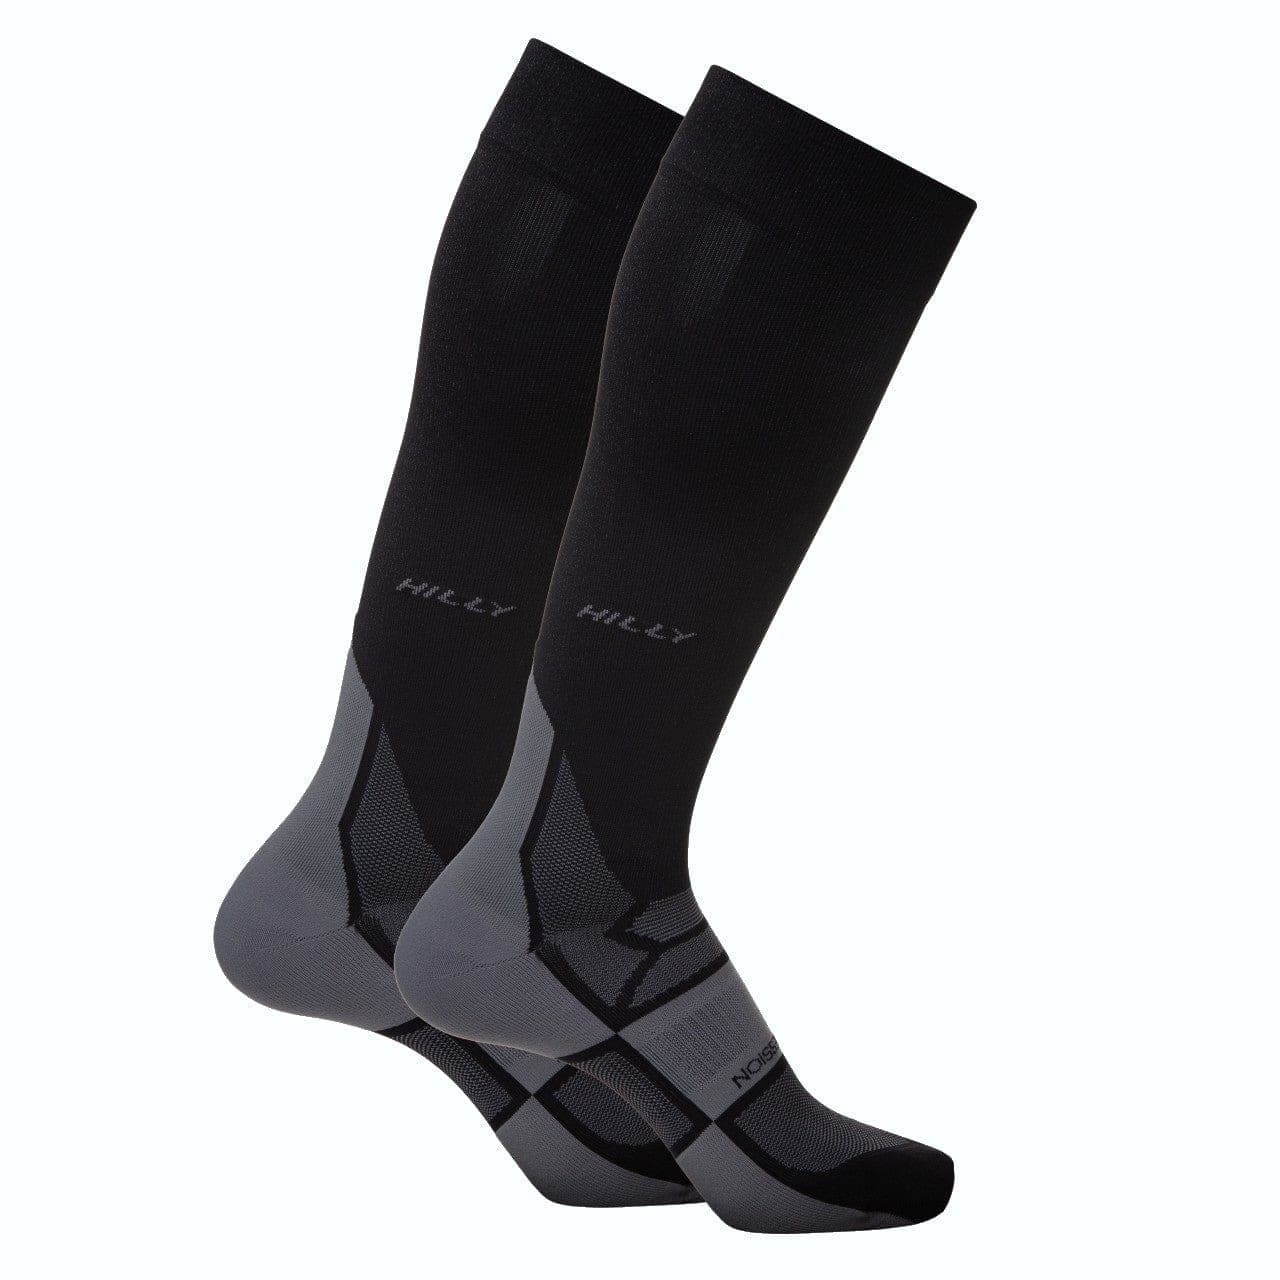 Hilly Pulse Compression Sock Min - Black/Grey